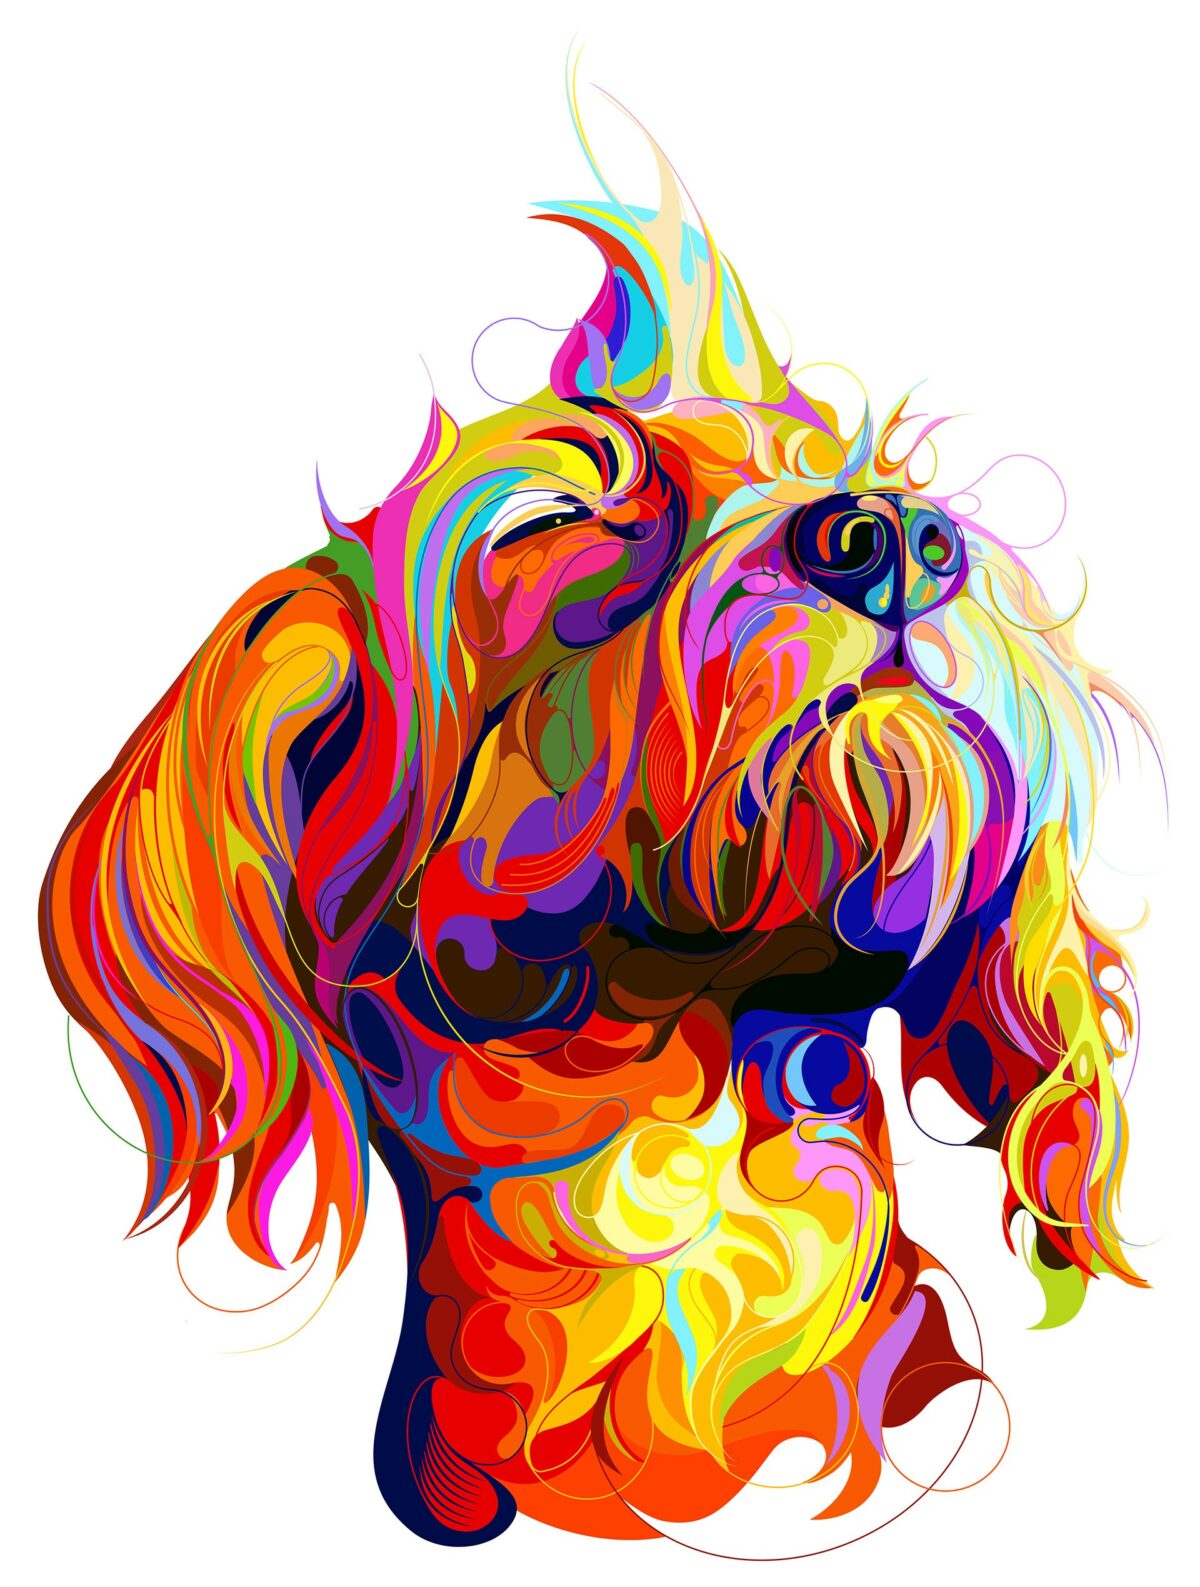 Kaleidoscopic Illustrations Of Expressive Dogs By Marina Okhromenko 10